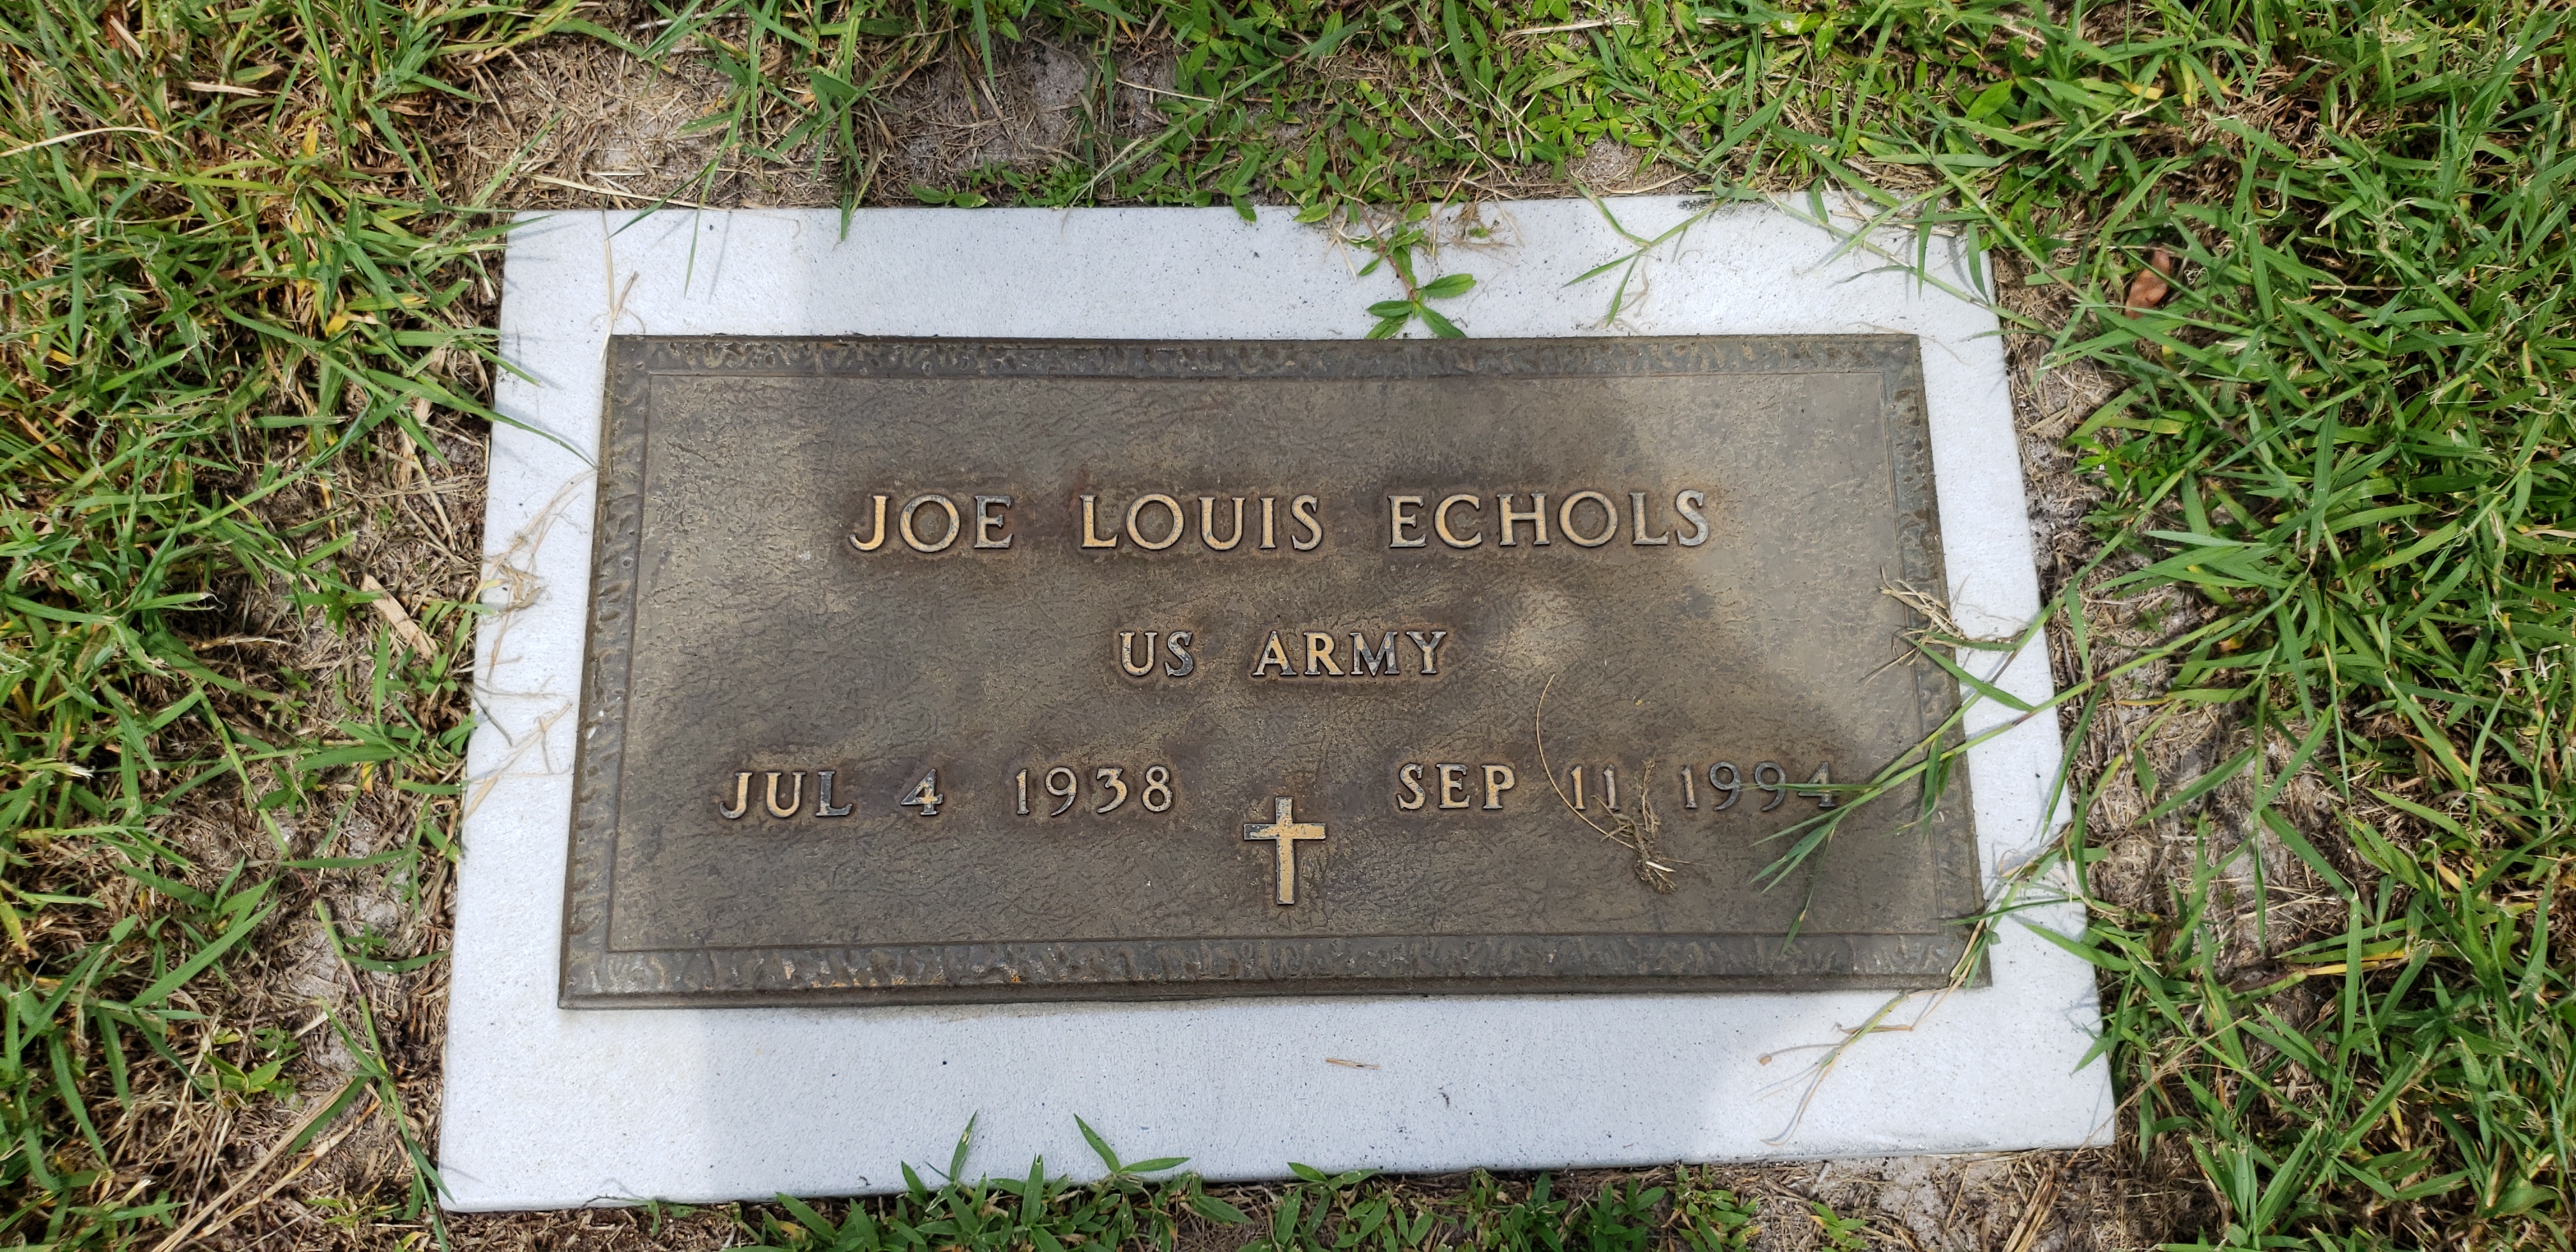 Joe Louis Echols